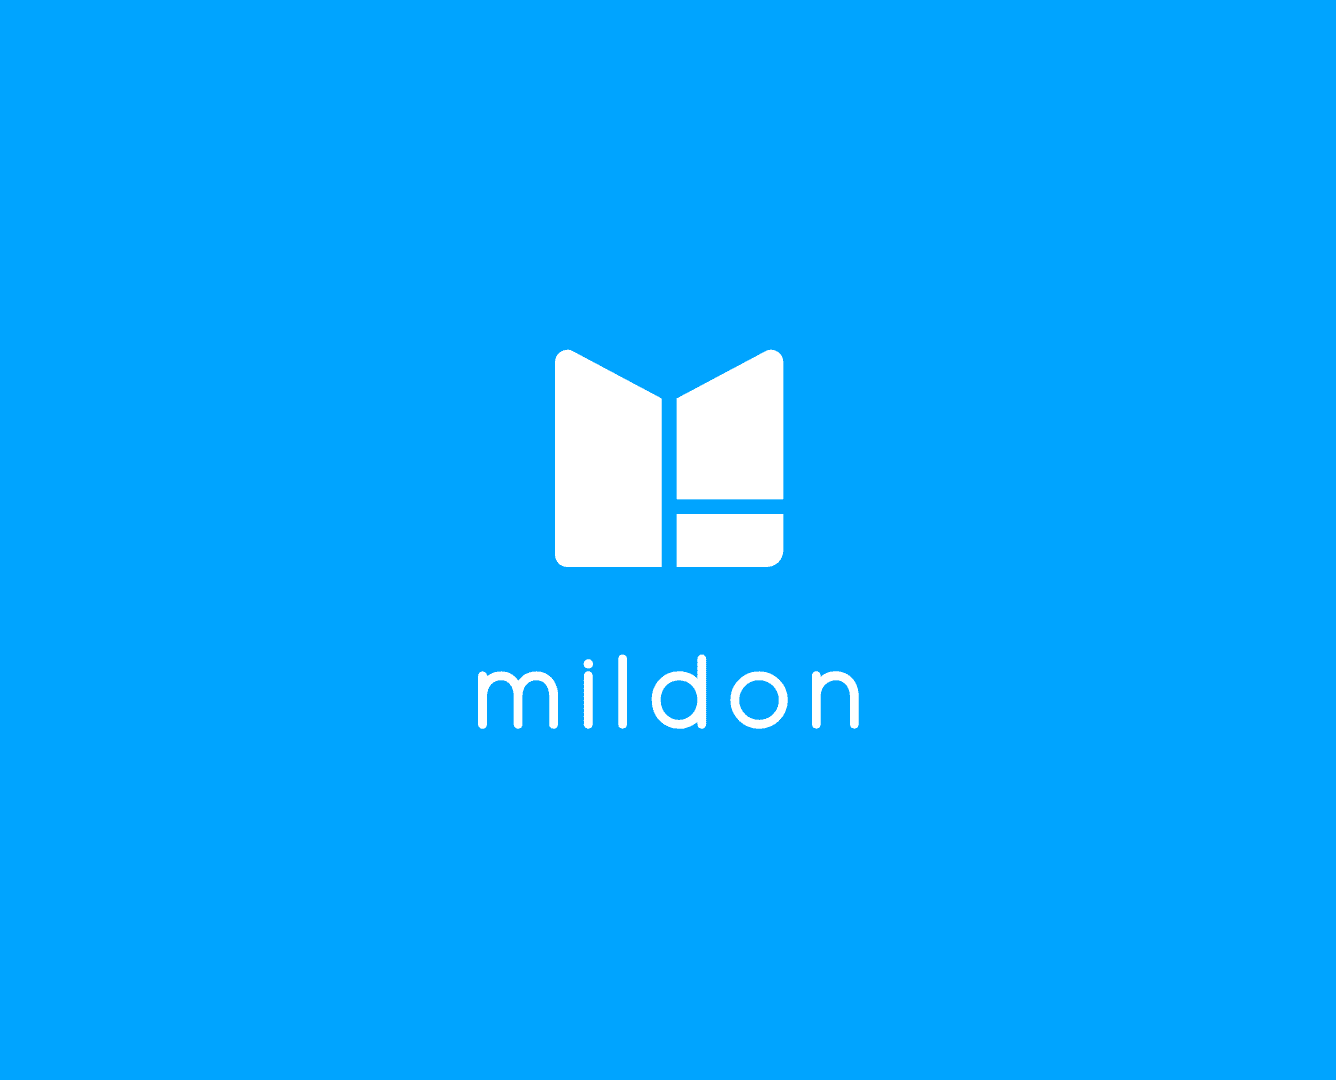 Mildon logo on blue